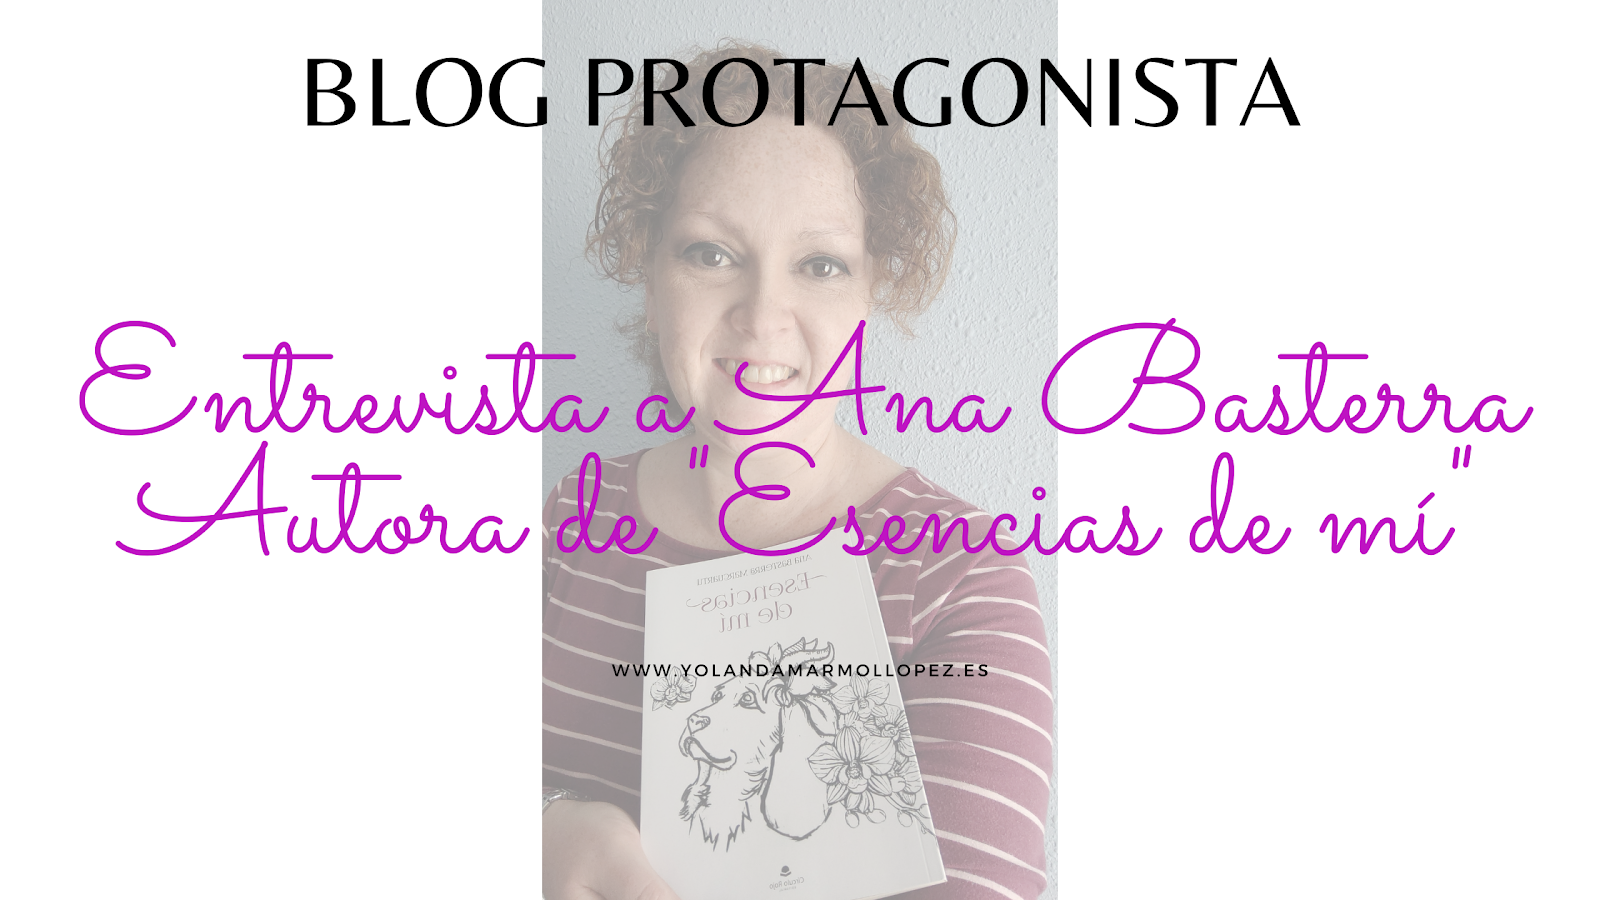 Entrevista a Ana Basterra, autora de Esencias de mí